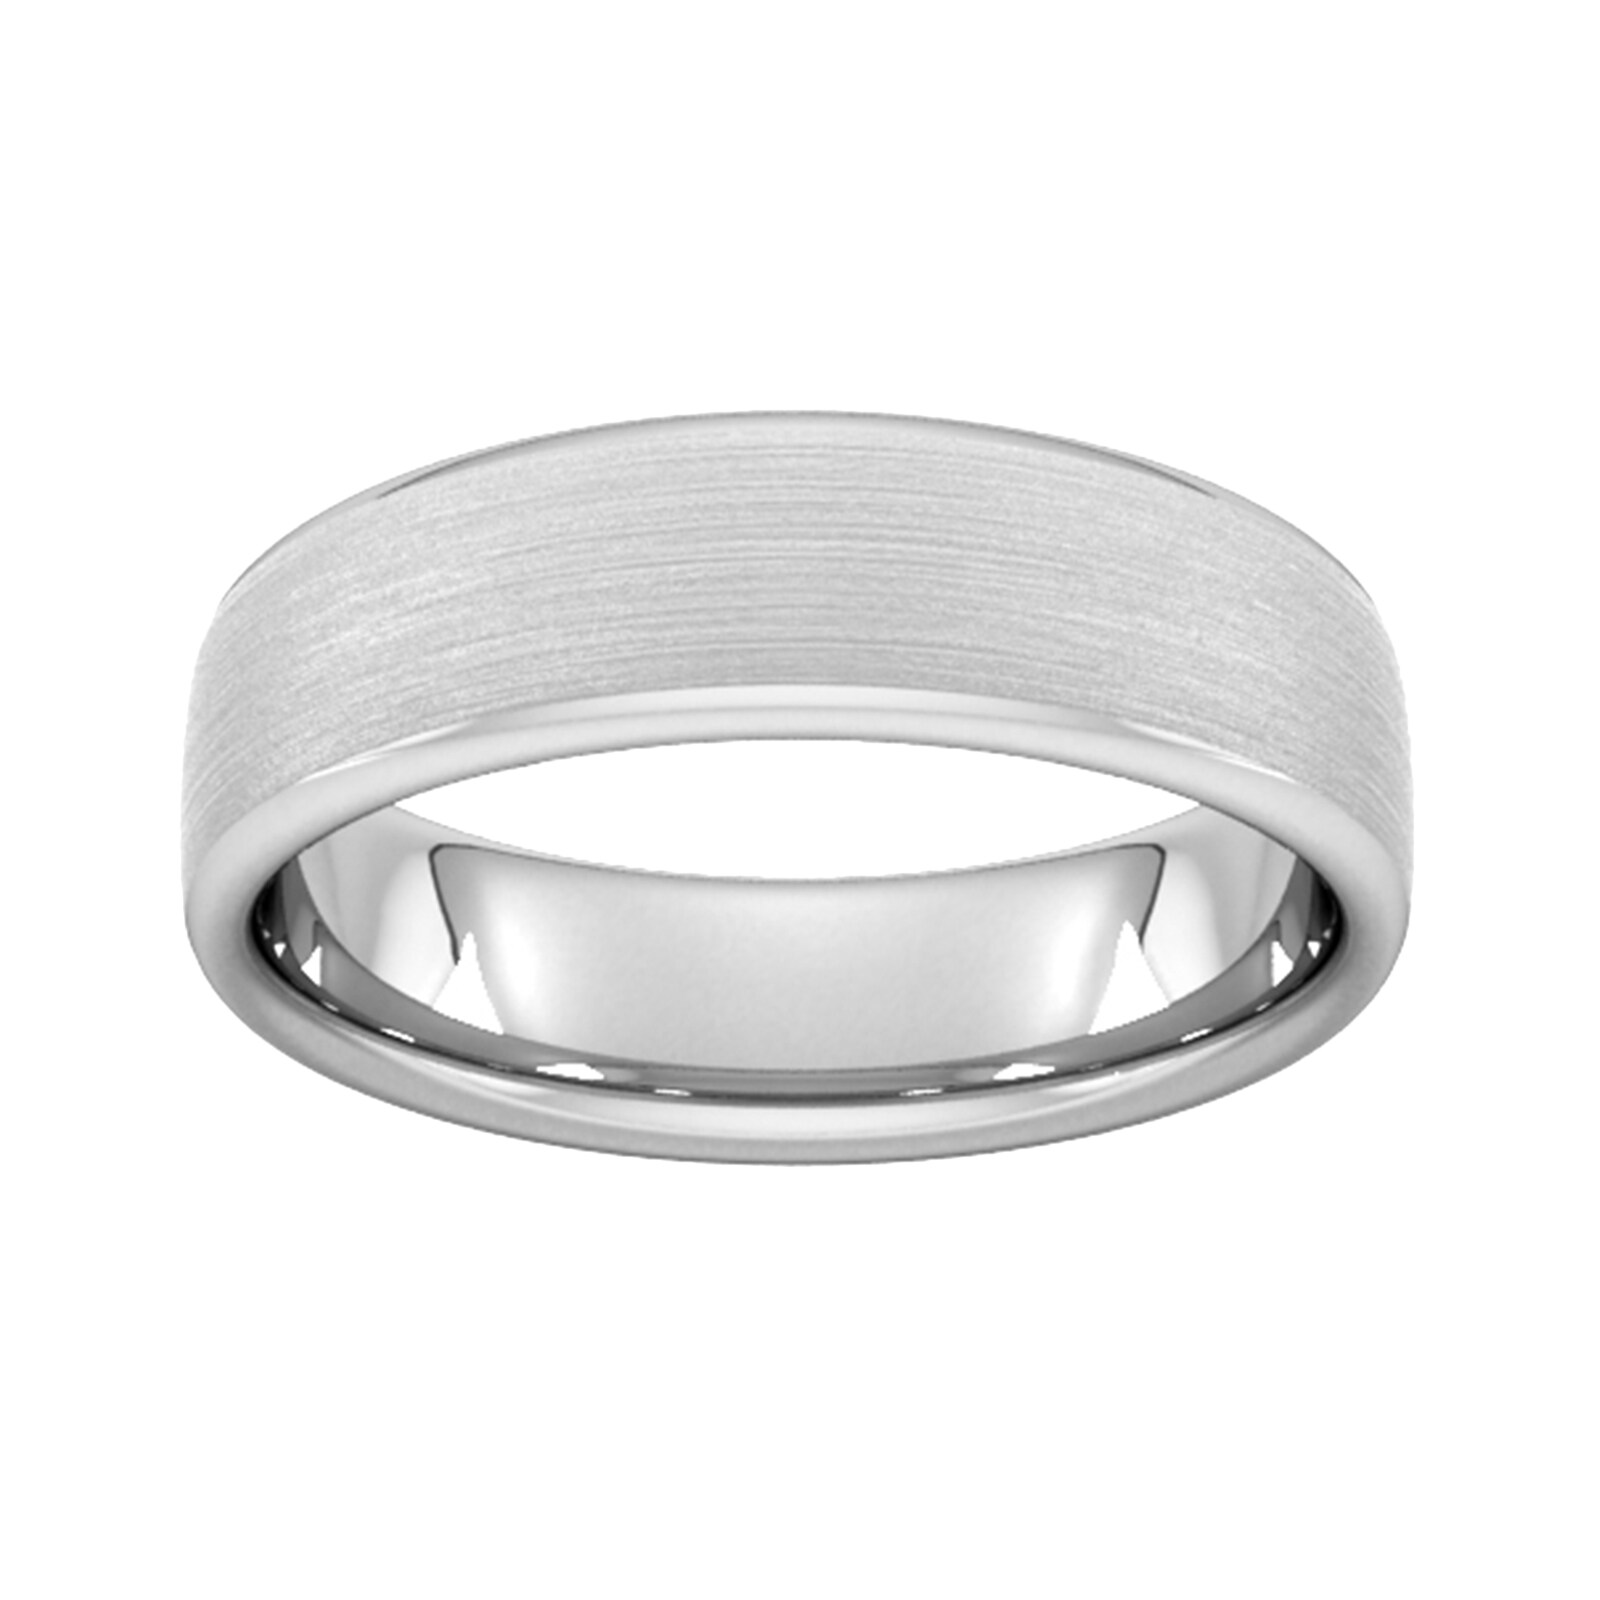 6mm Slight Court Standard Matt Finished Wedding Ring In 18 Carat White Gold - Ring Size U